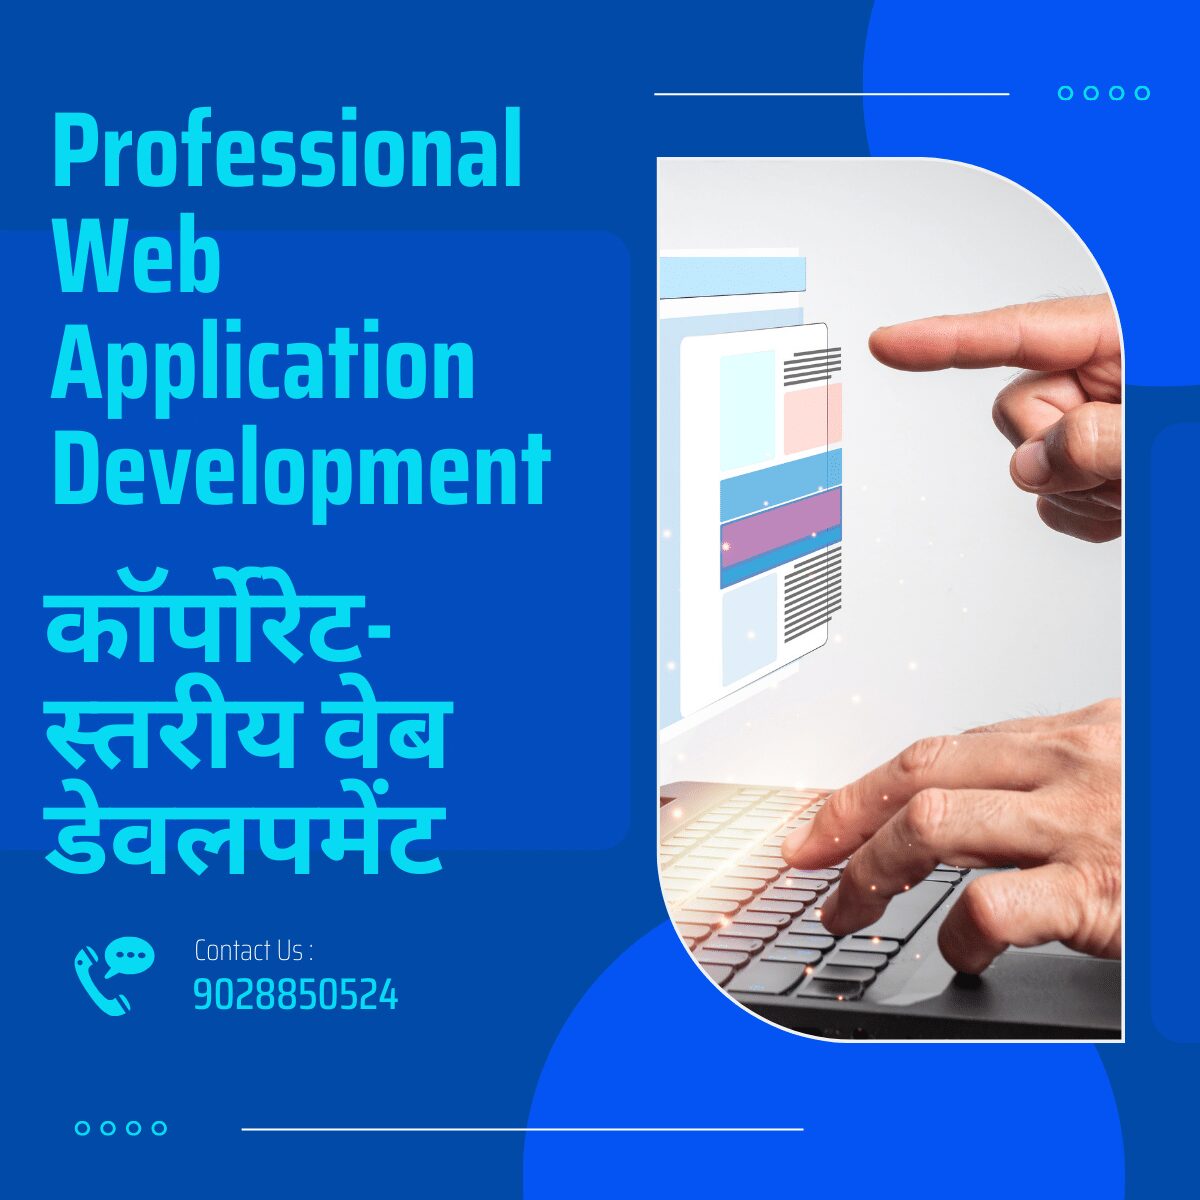 Professional Web Application Development कॉर्पोरेट-स्तरीय वेब डेवलपमेंट